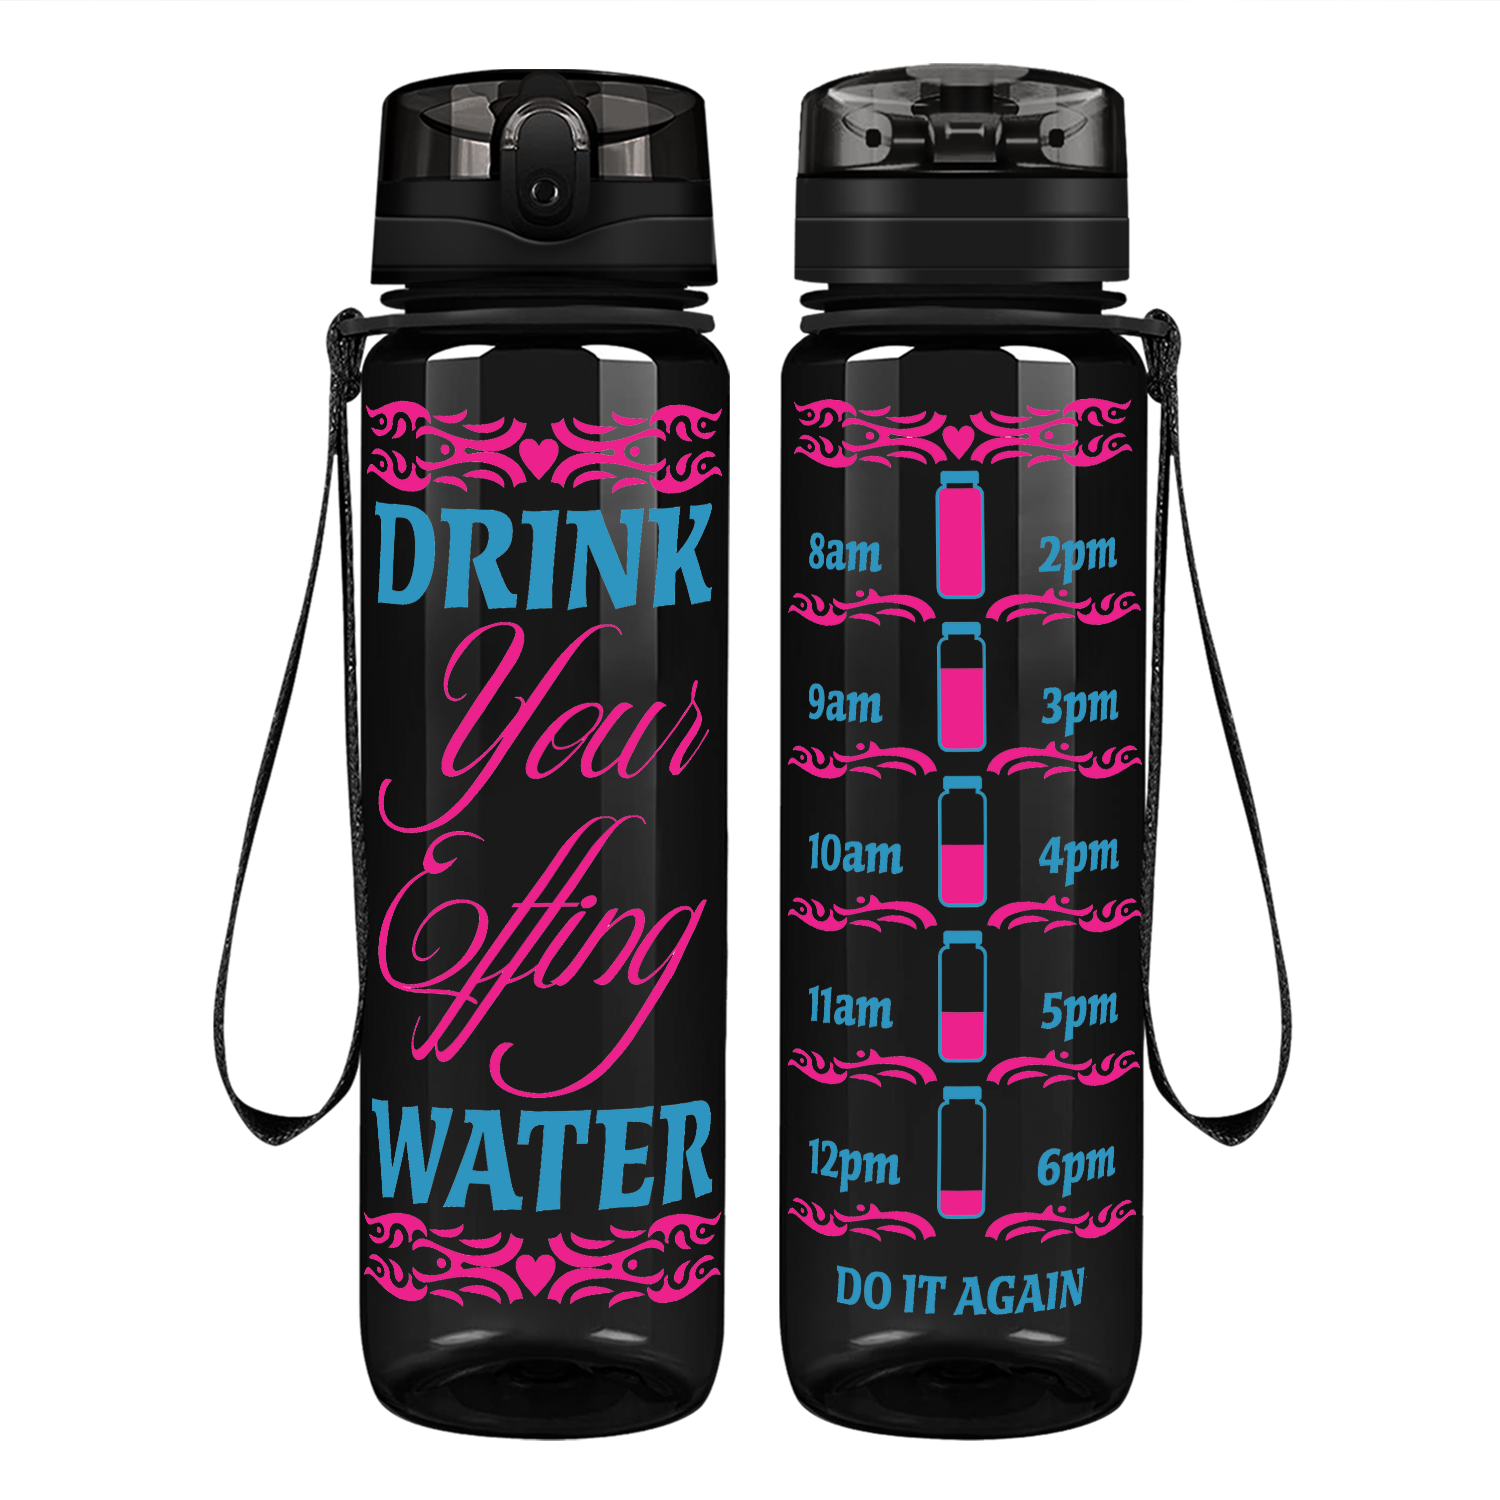 Water Bottle Tracker Motivational Water Bottle Drink Your Effing